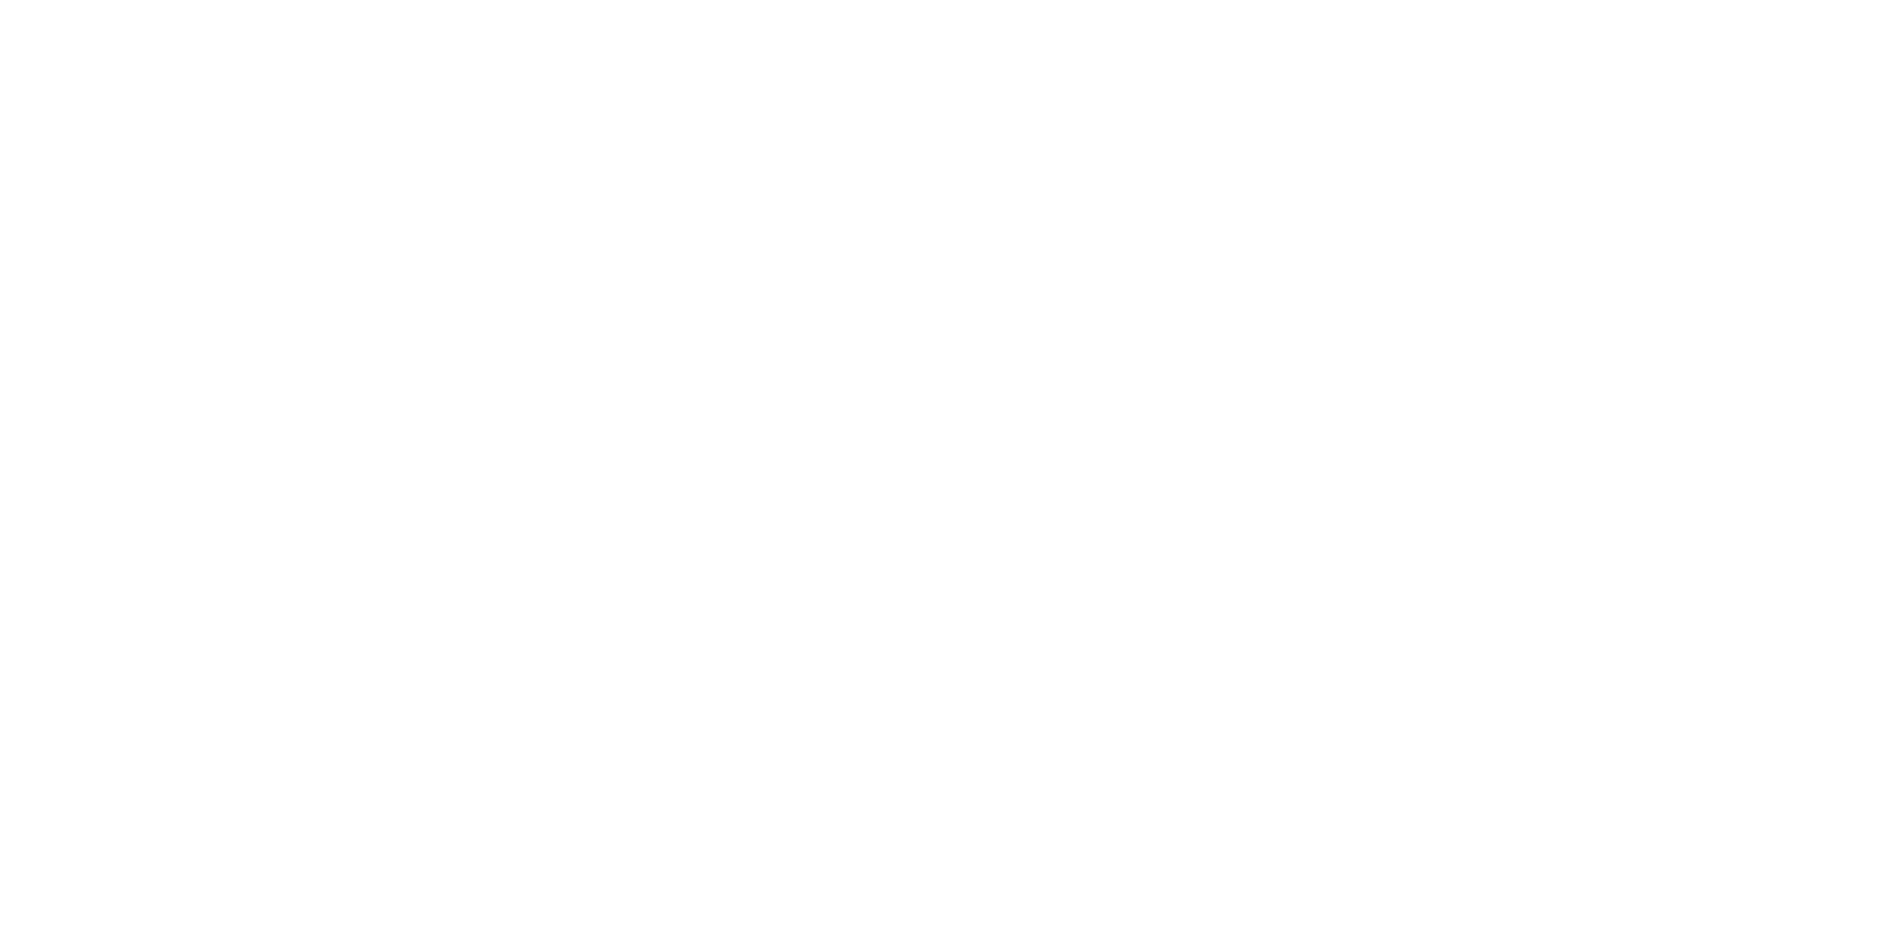 Steve Chucri for Maricopa County Supervisor